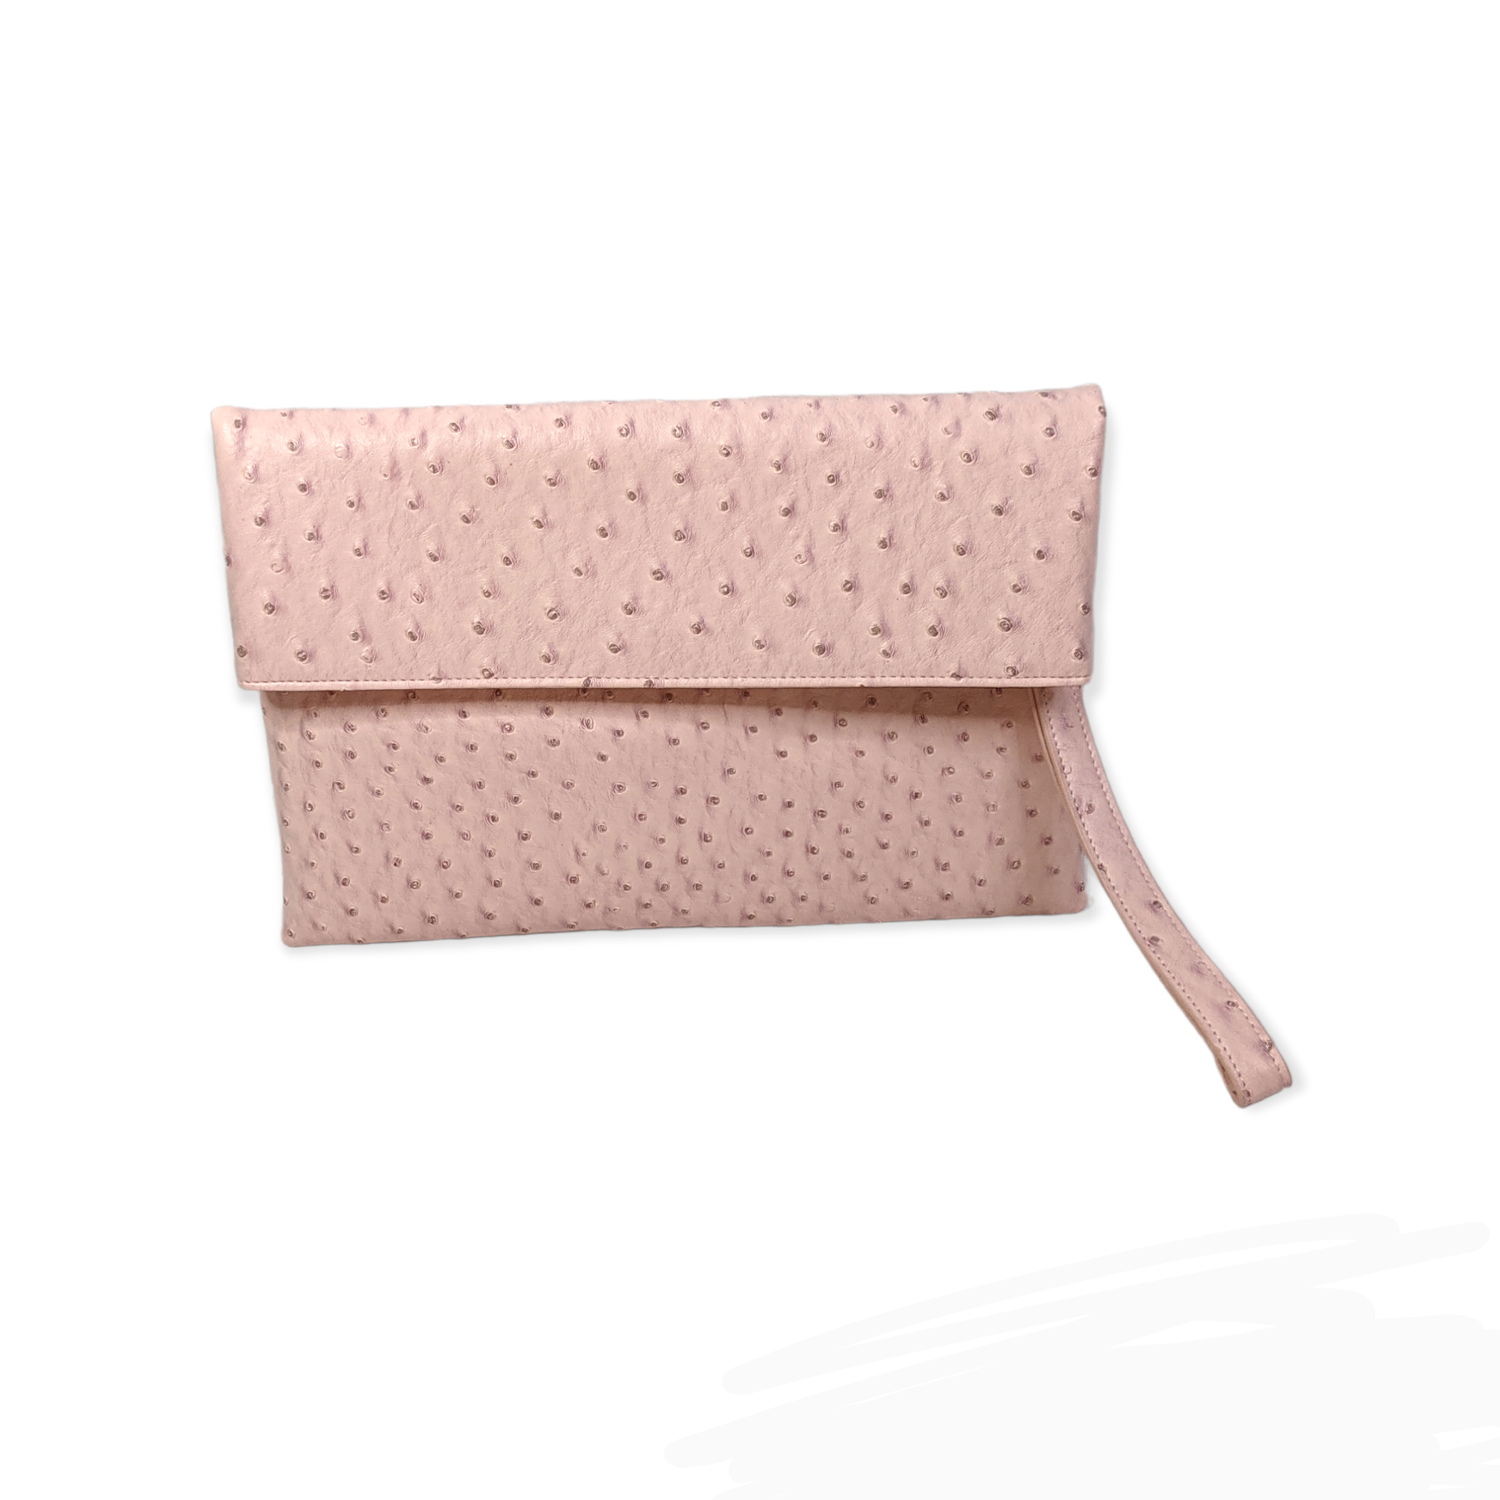 Buy Fuchsia Pink Mini Handbag Soft Structured Leather Crossbody Bag Women  Gift Idea Shoulder Bag Online in India - Etsy